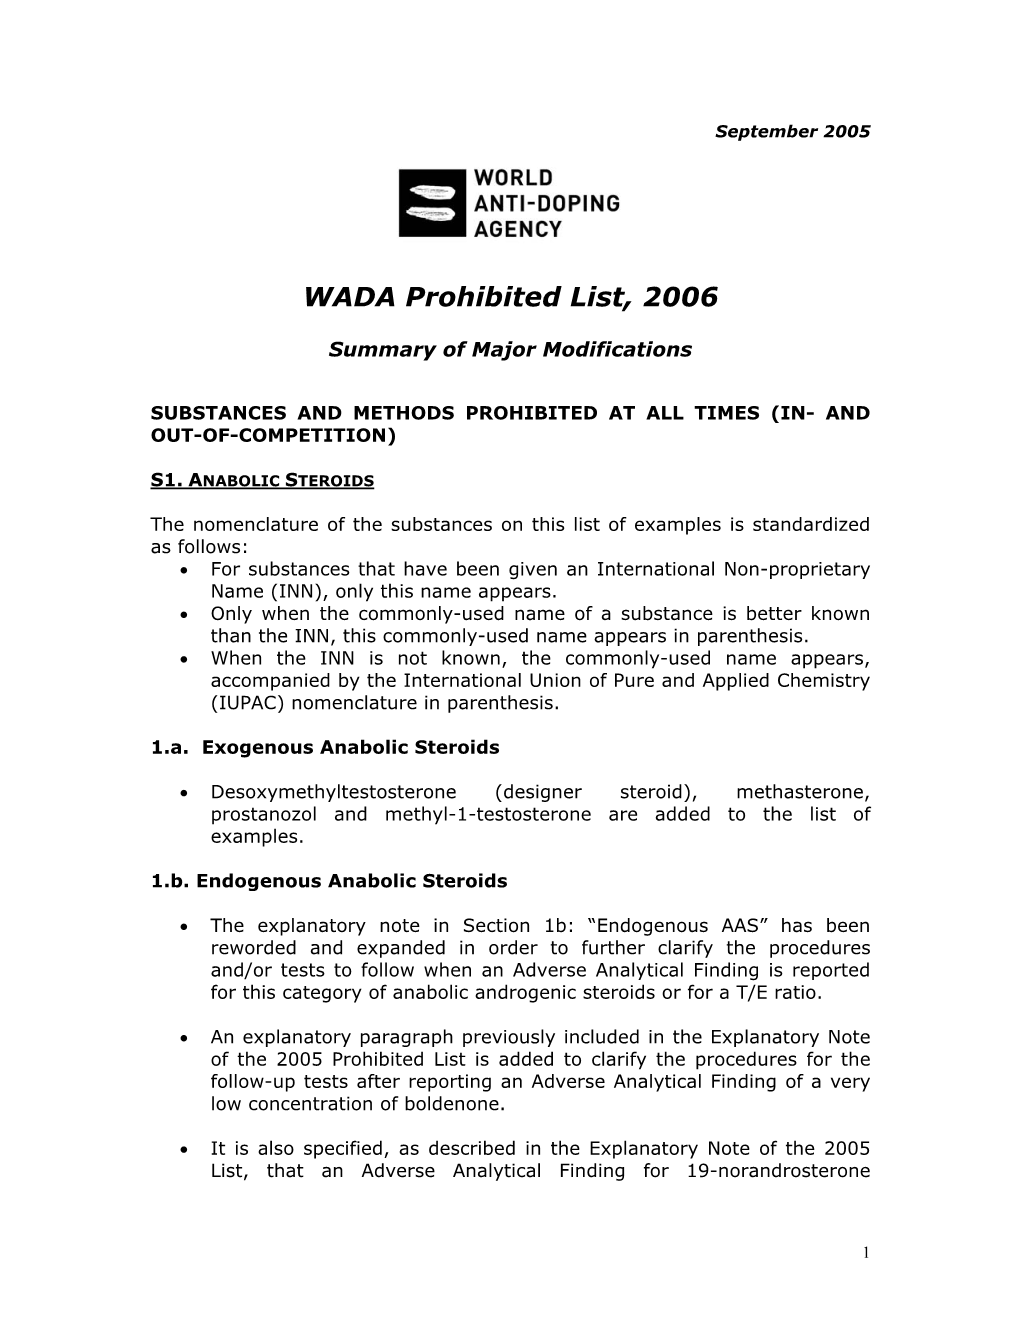 WADA Prohibited List, 2006